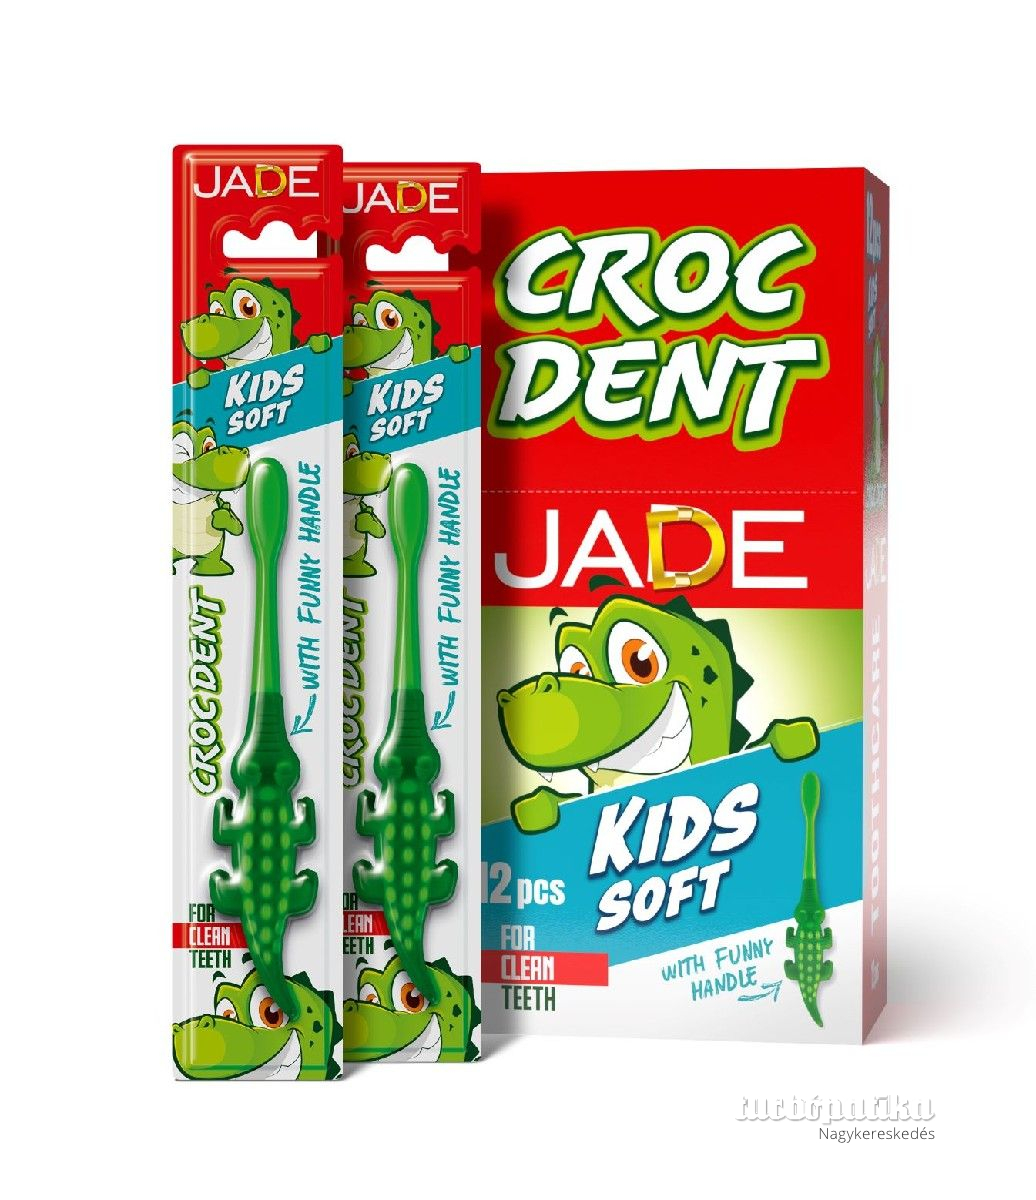  Jade fogkefe gyerek 1x Croc Dent KIDS SOFT